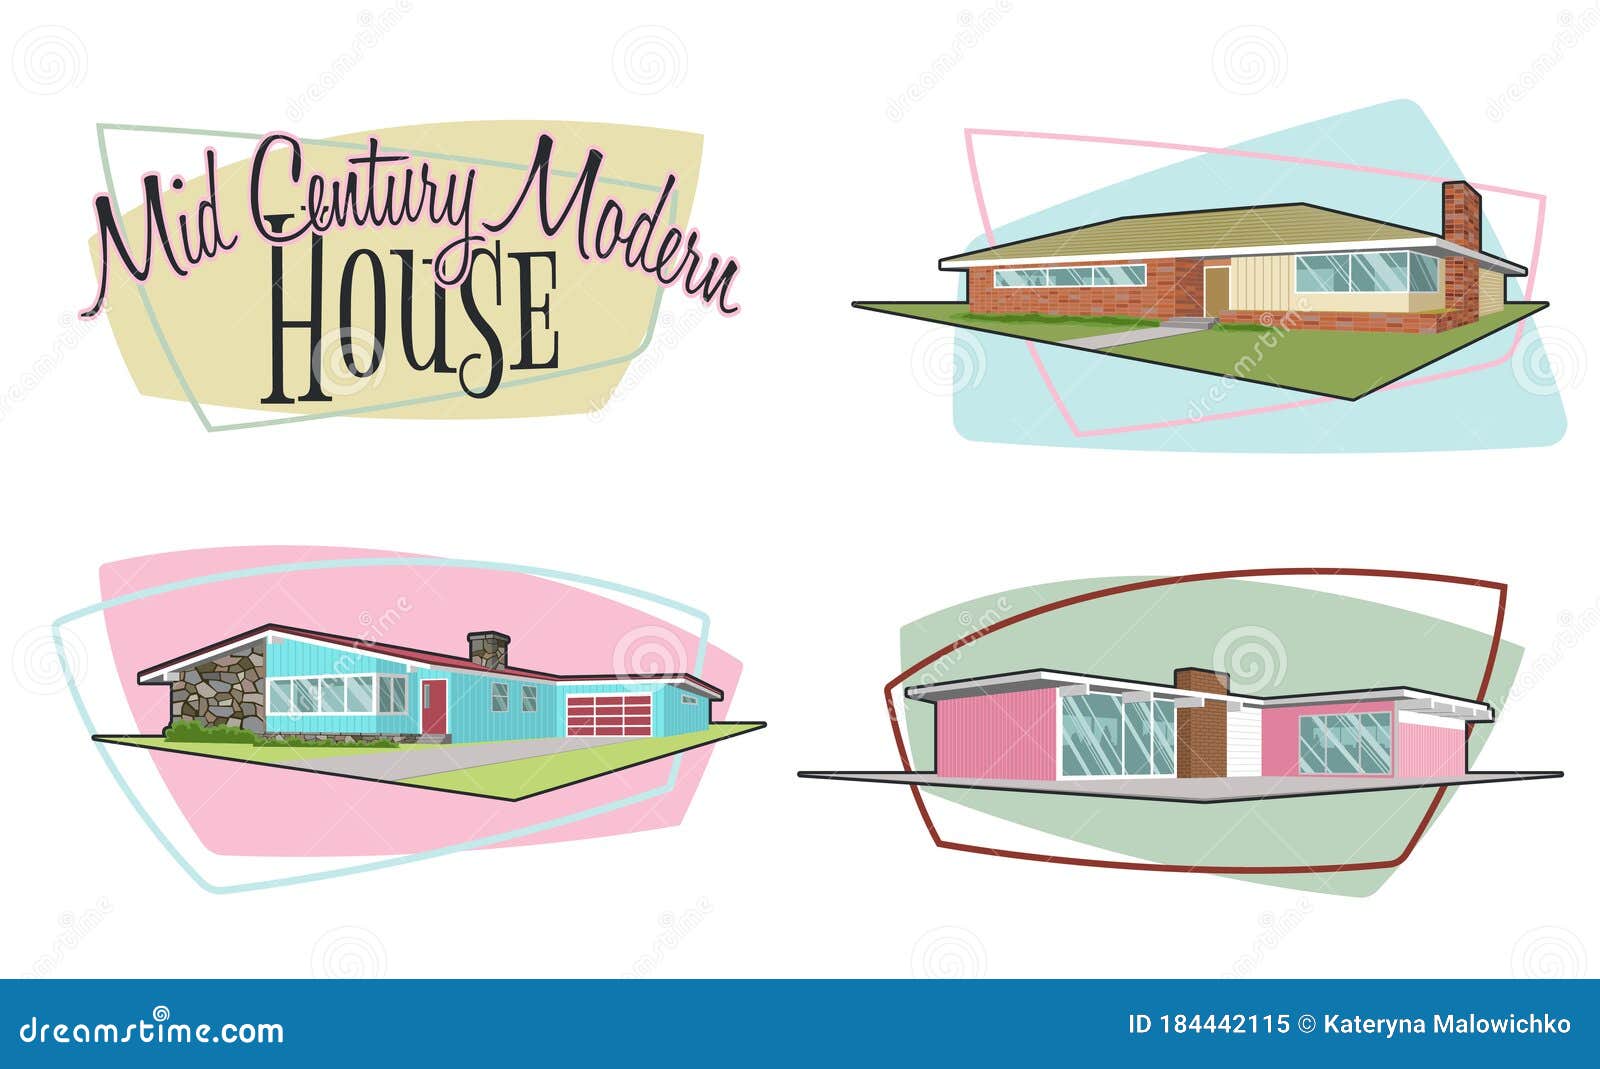 mid century modern house set